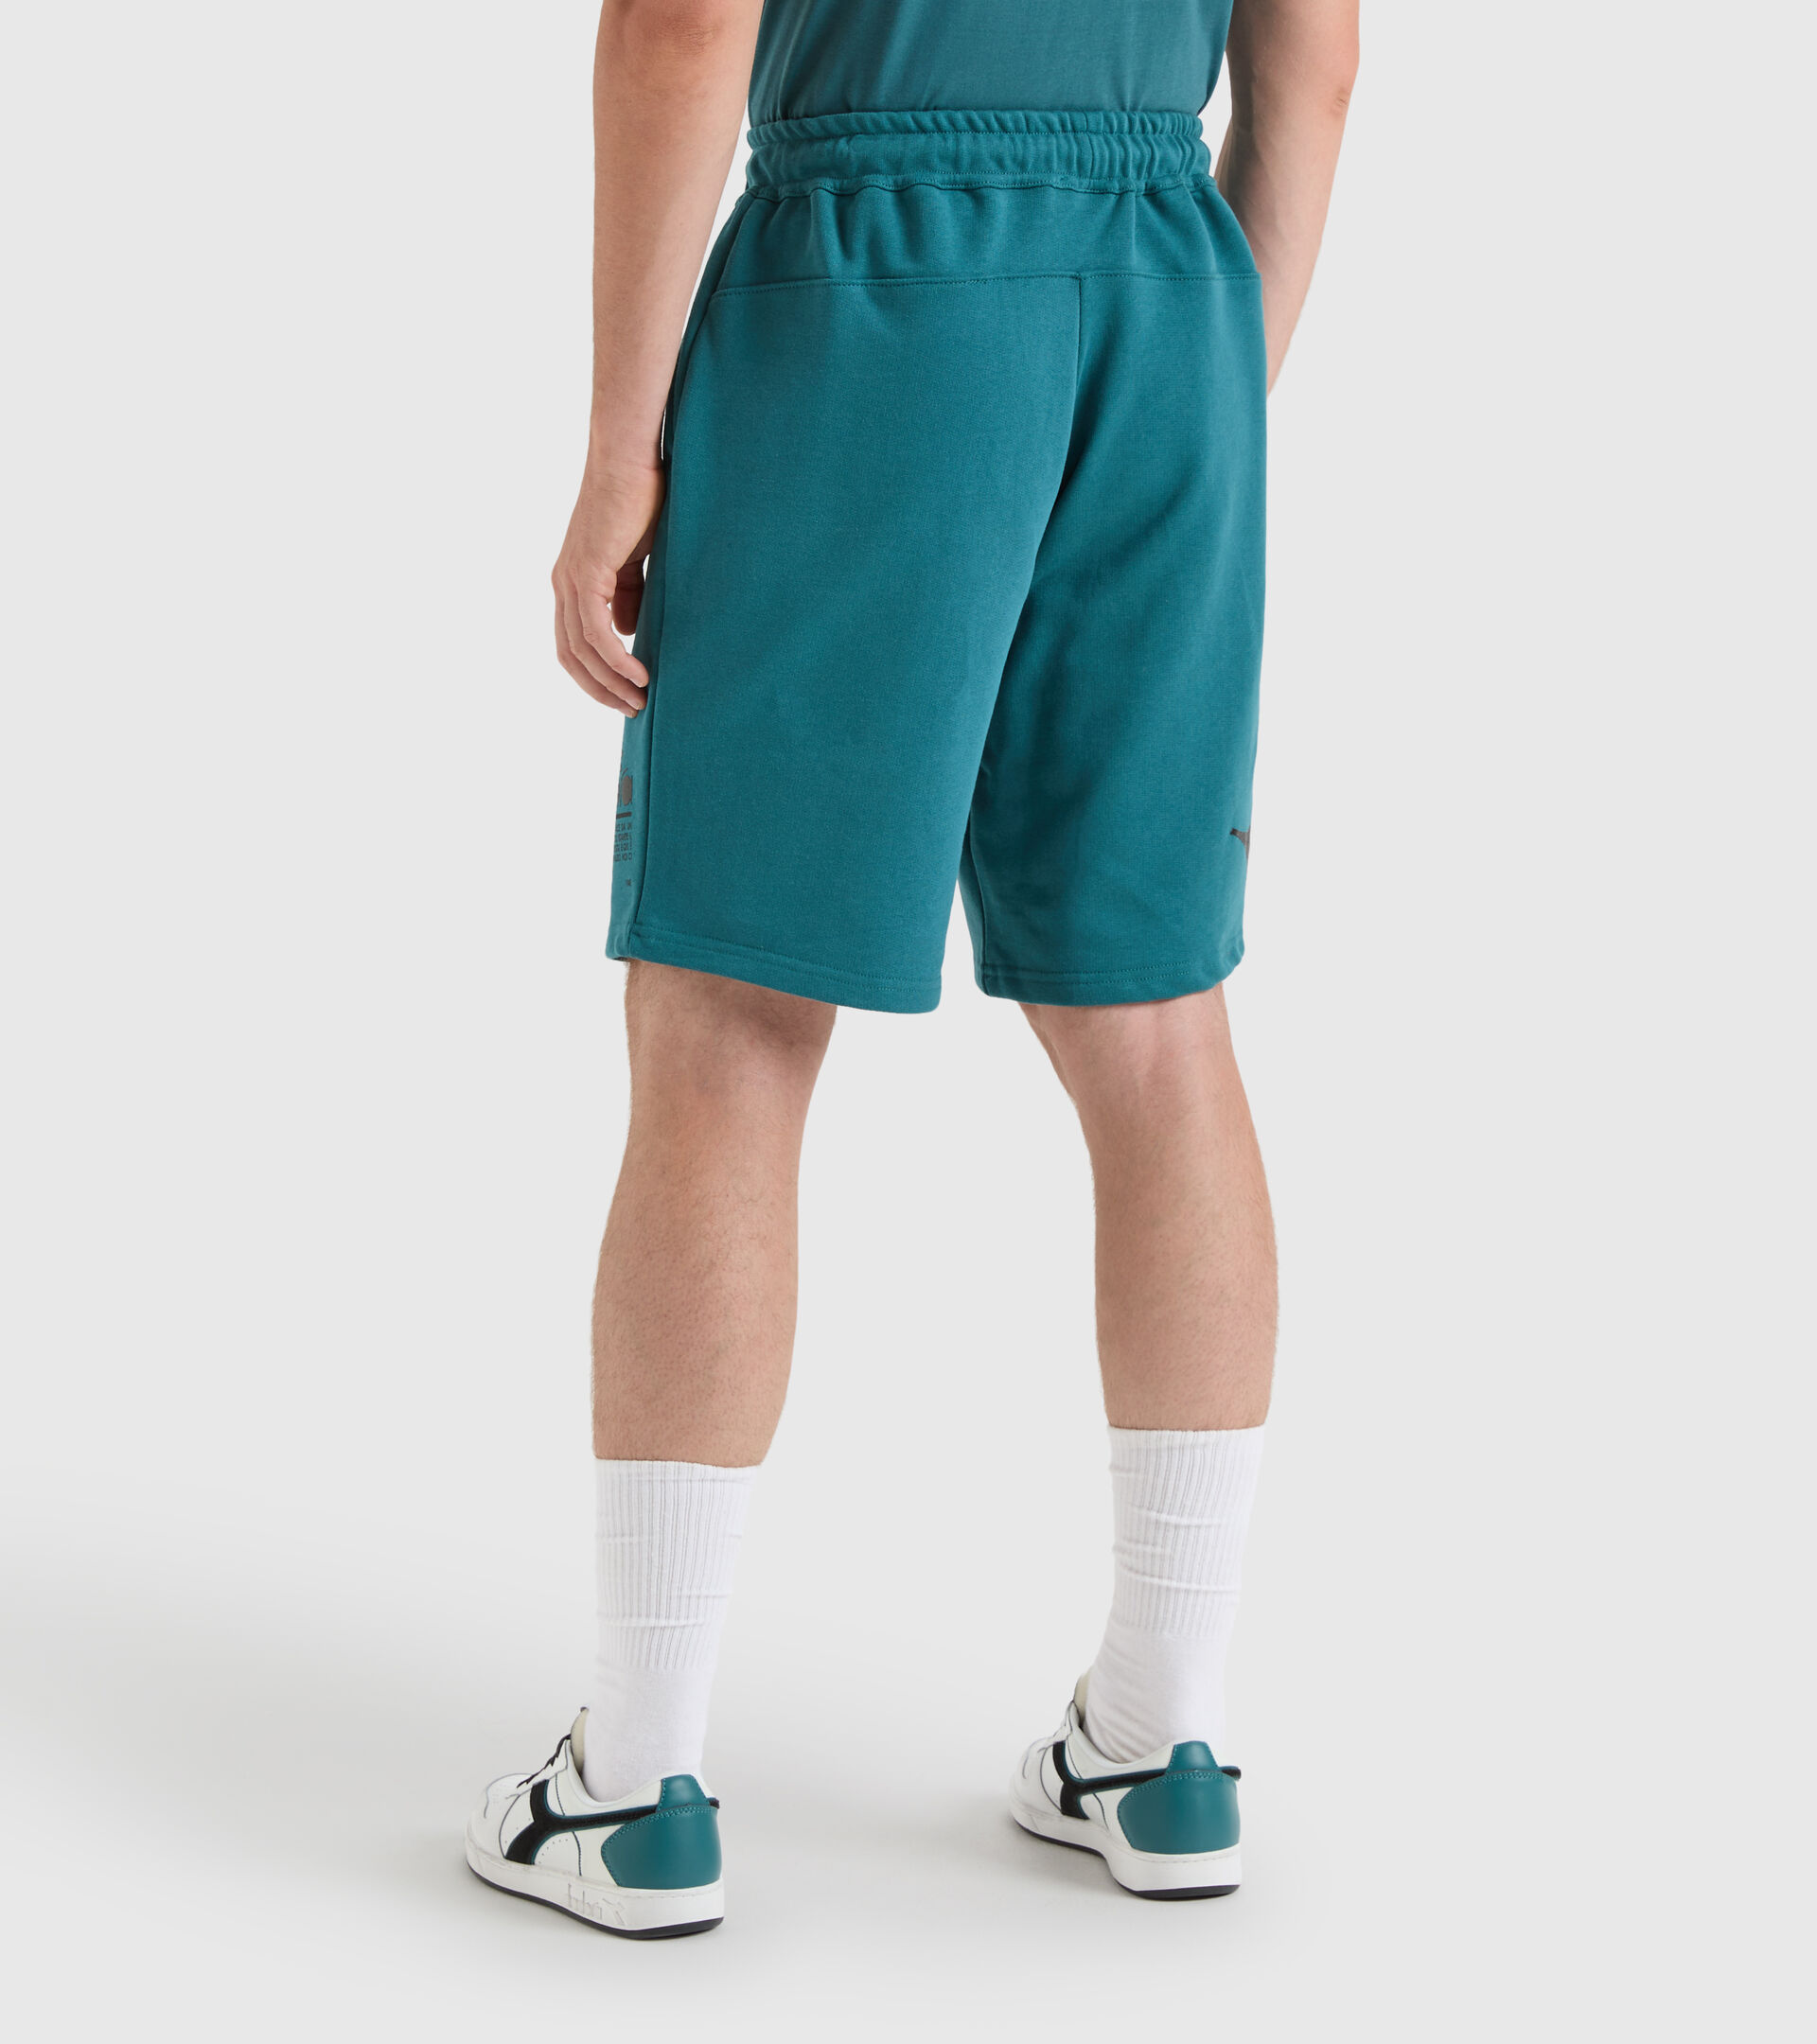 Cotton shorts - Unisex BERMUDA MANIFESTO BLUE PACIFIC - Diadora